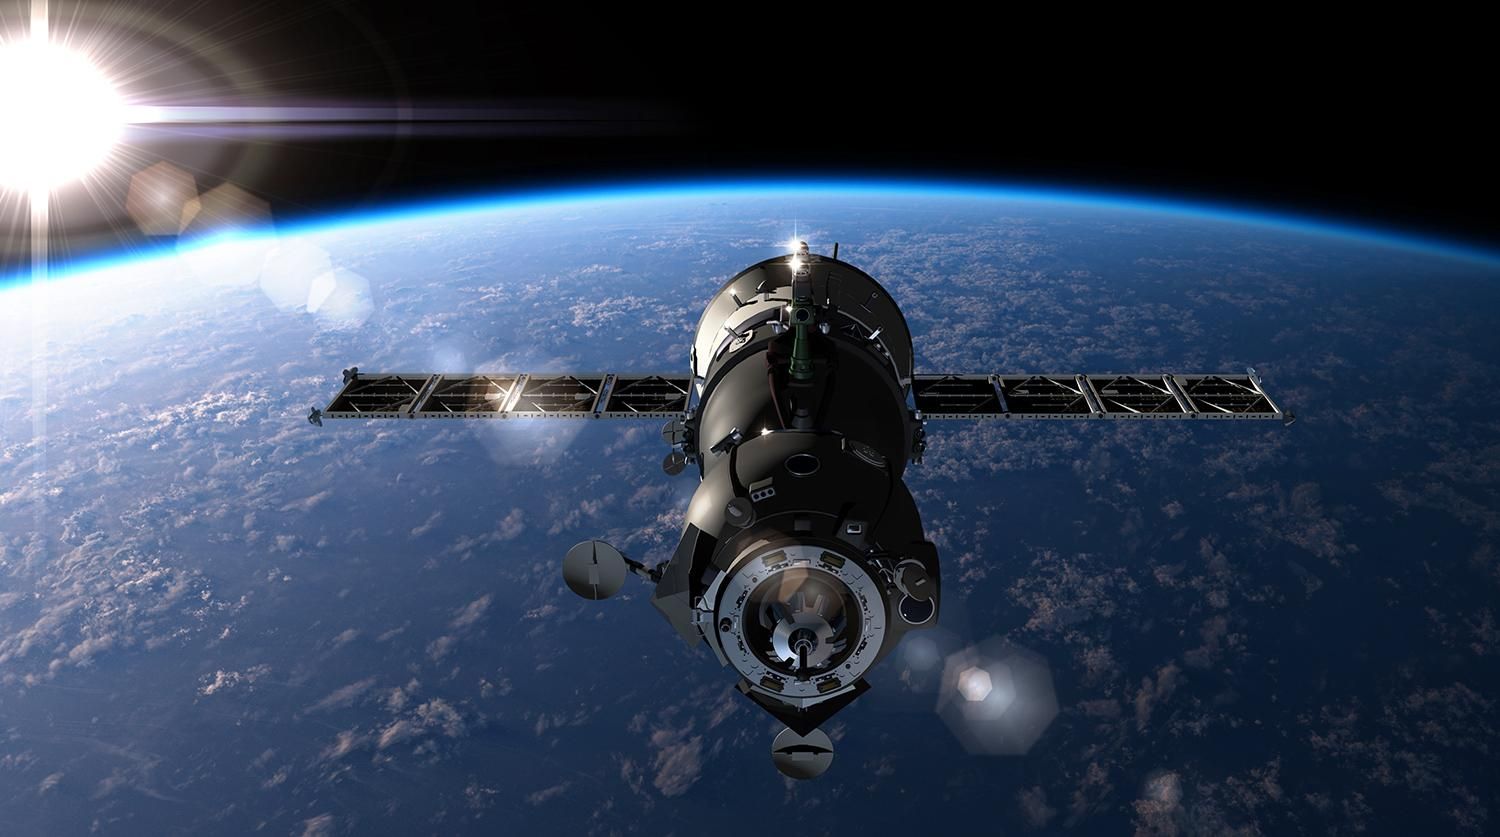 Спутник Sirius XM, запущенный с помощью Falcon 9, не заработал